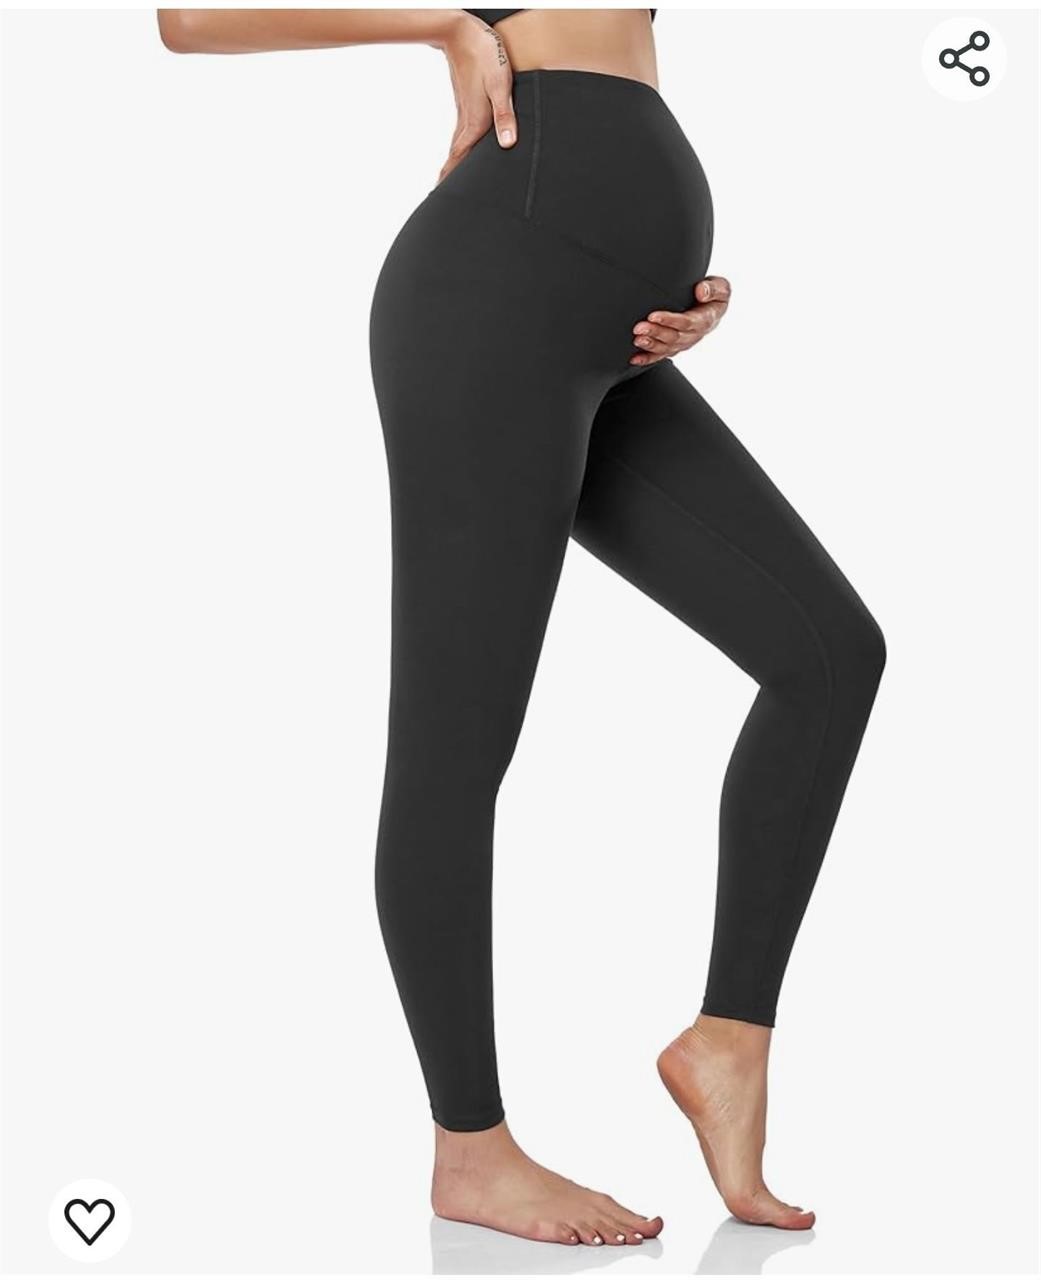 ($60) 1 pair HOFISH Maternity Leggings O